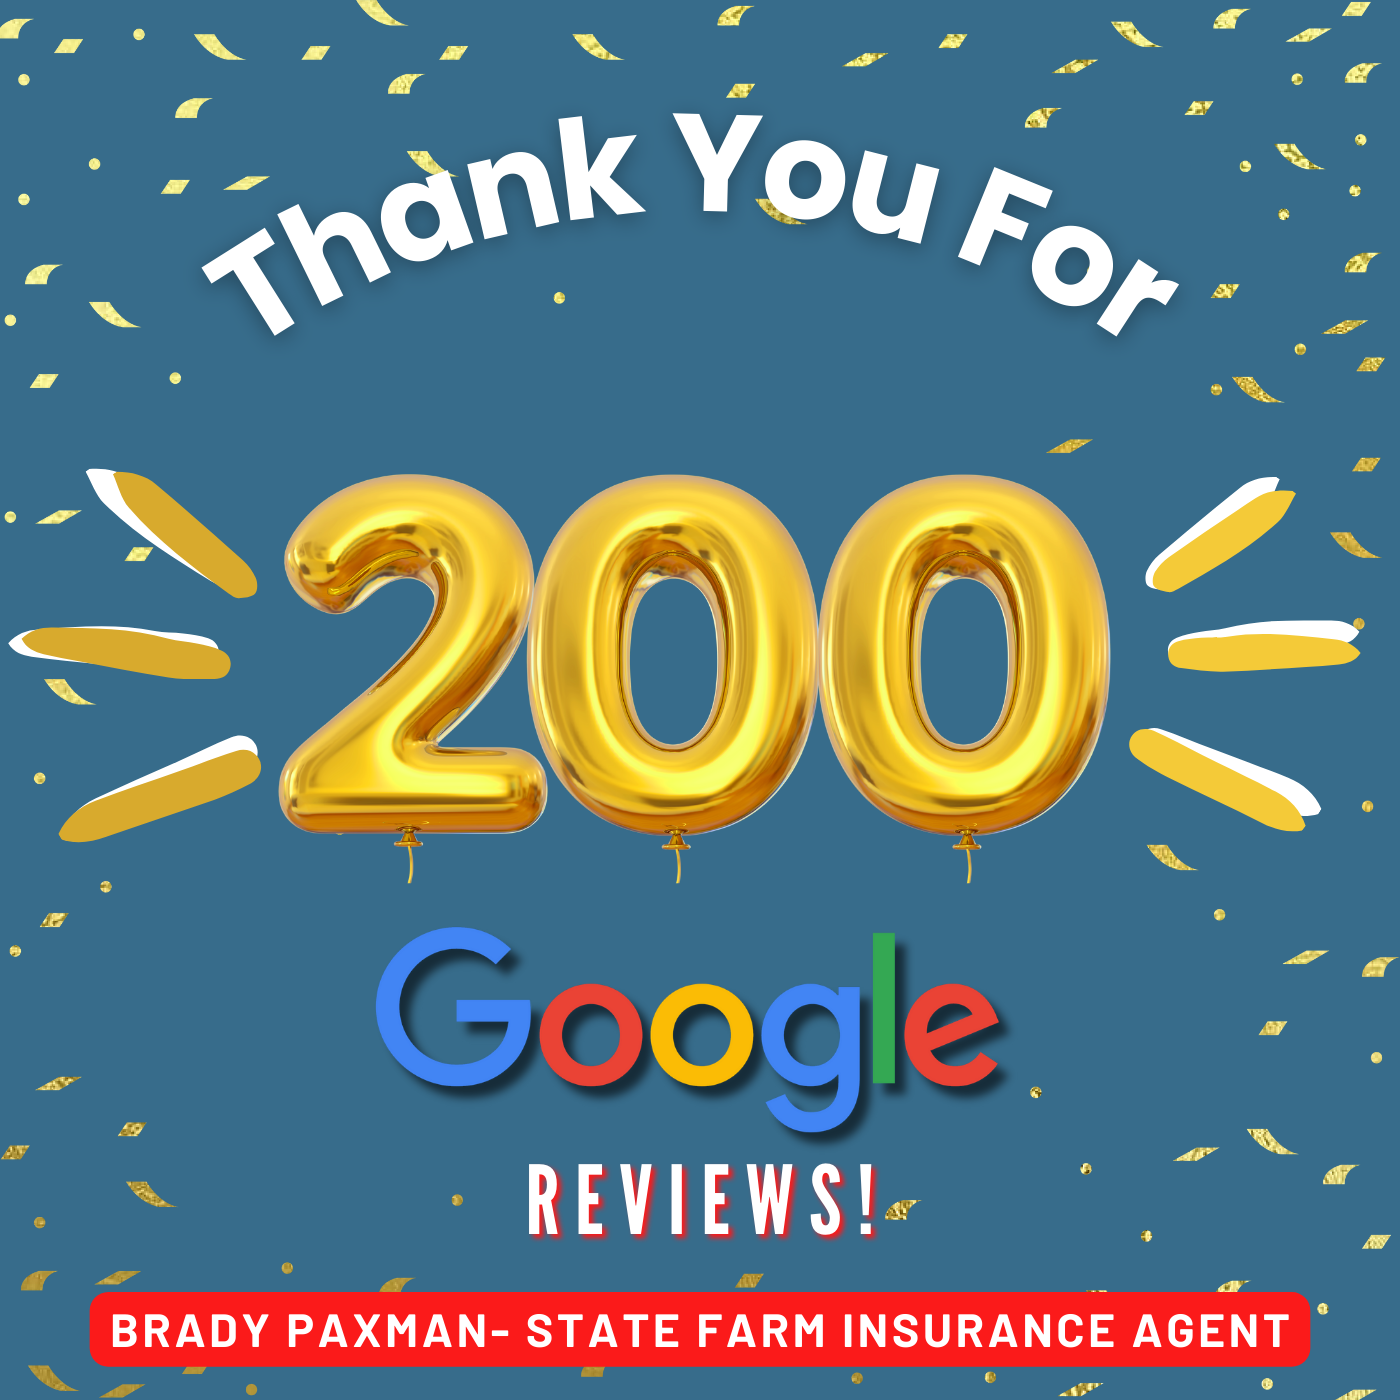 Brady Paxman - State Farm Insurance Agent